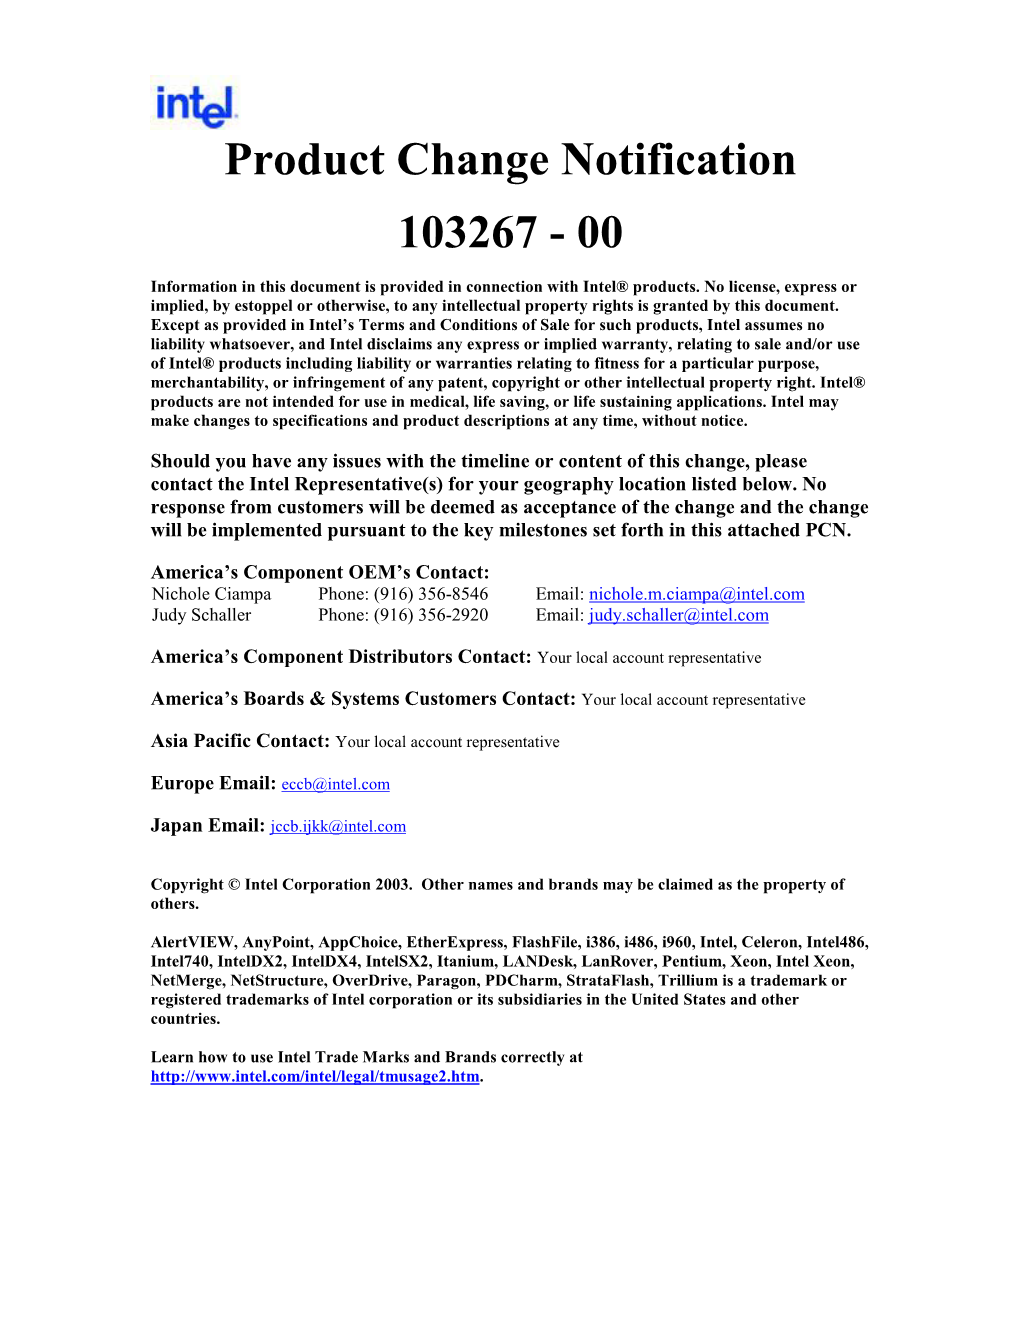 Product Change Notification 103267